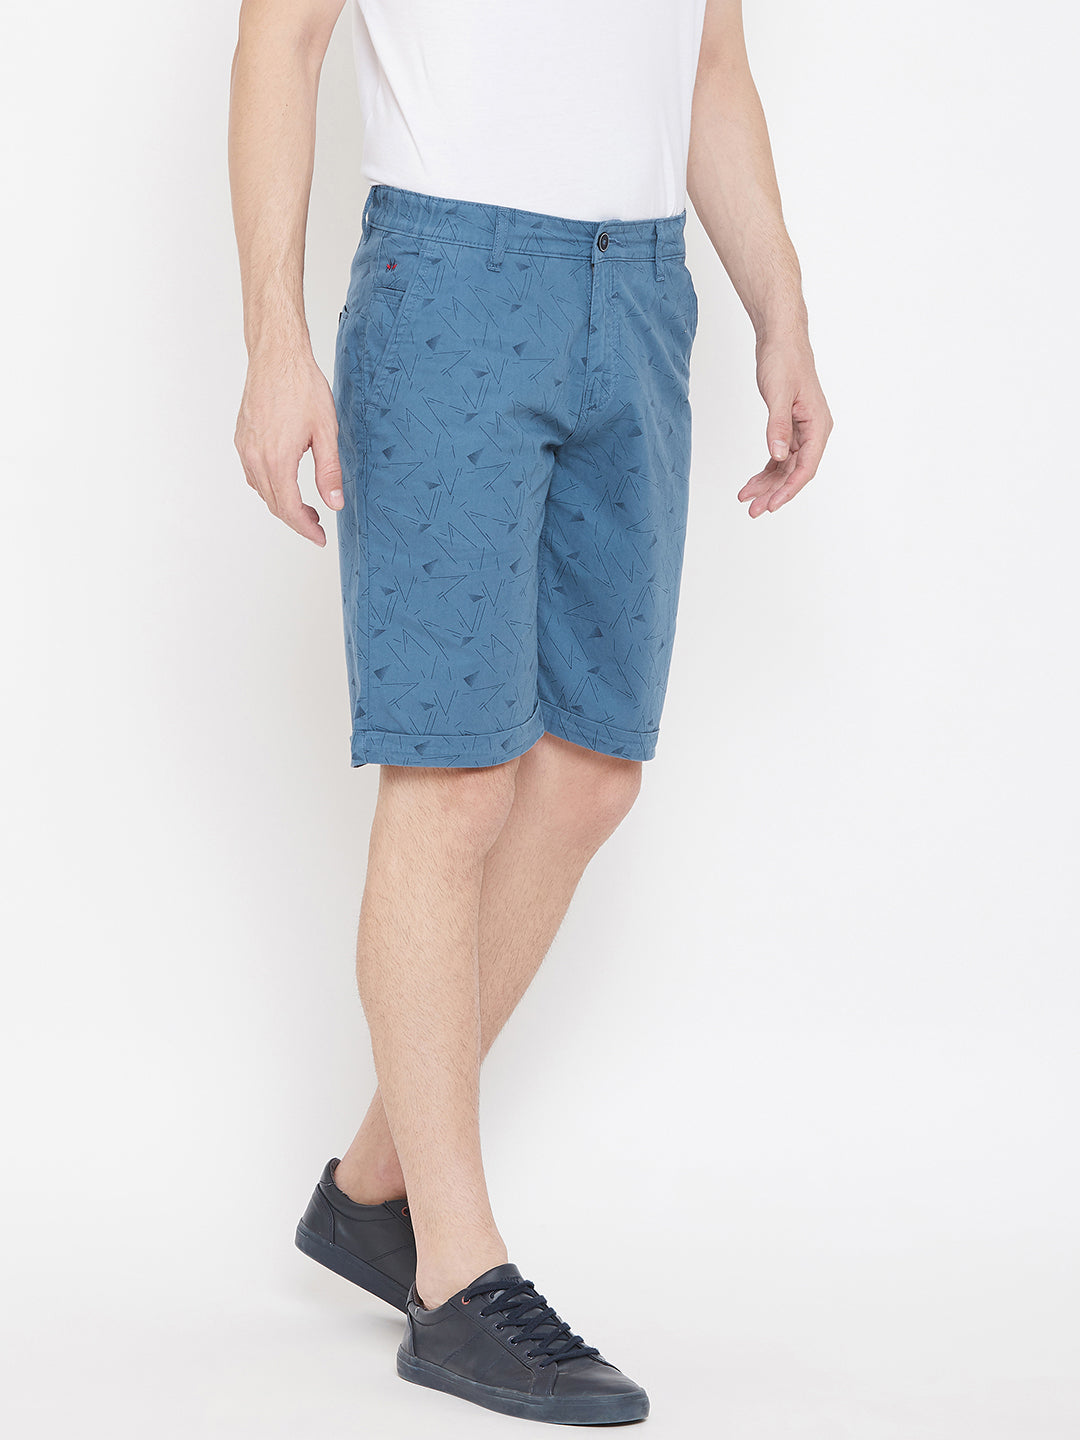 Blue Printed Slim Fit Shorts - Men Shorts